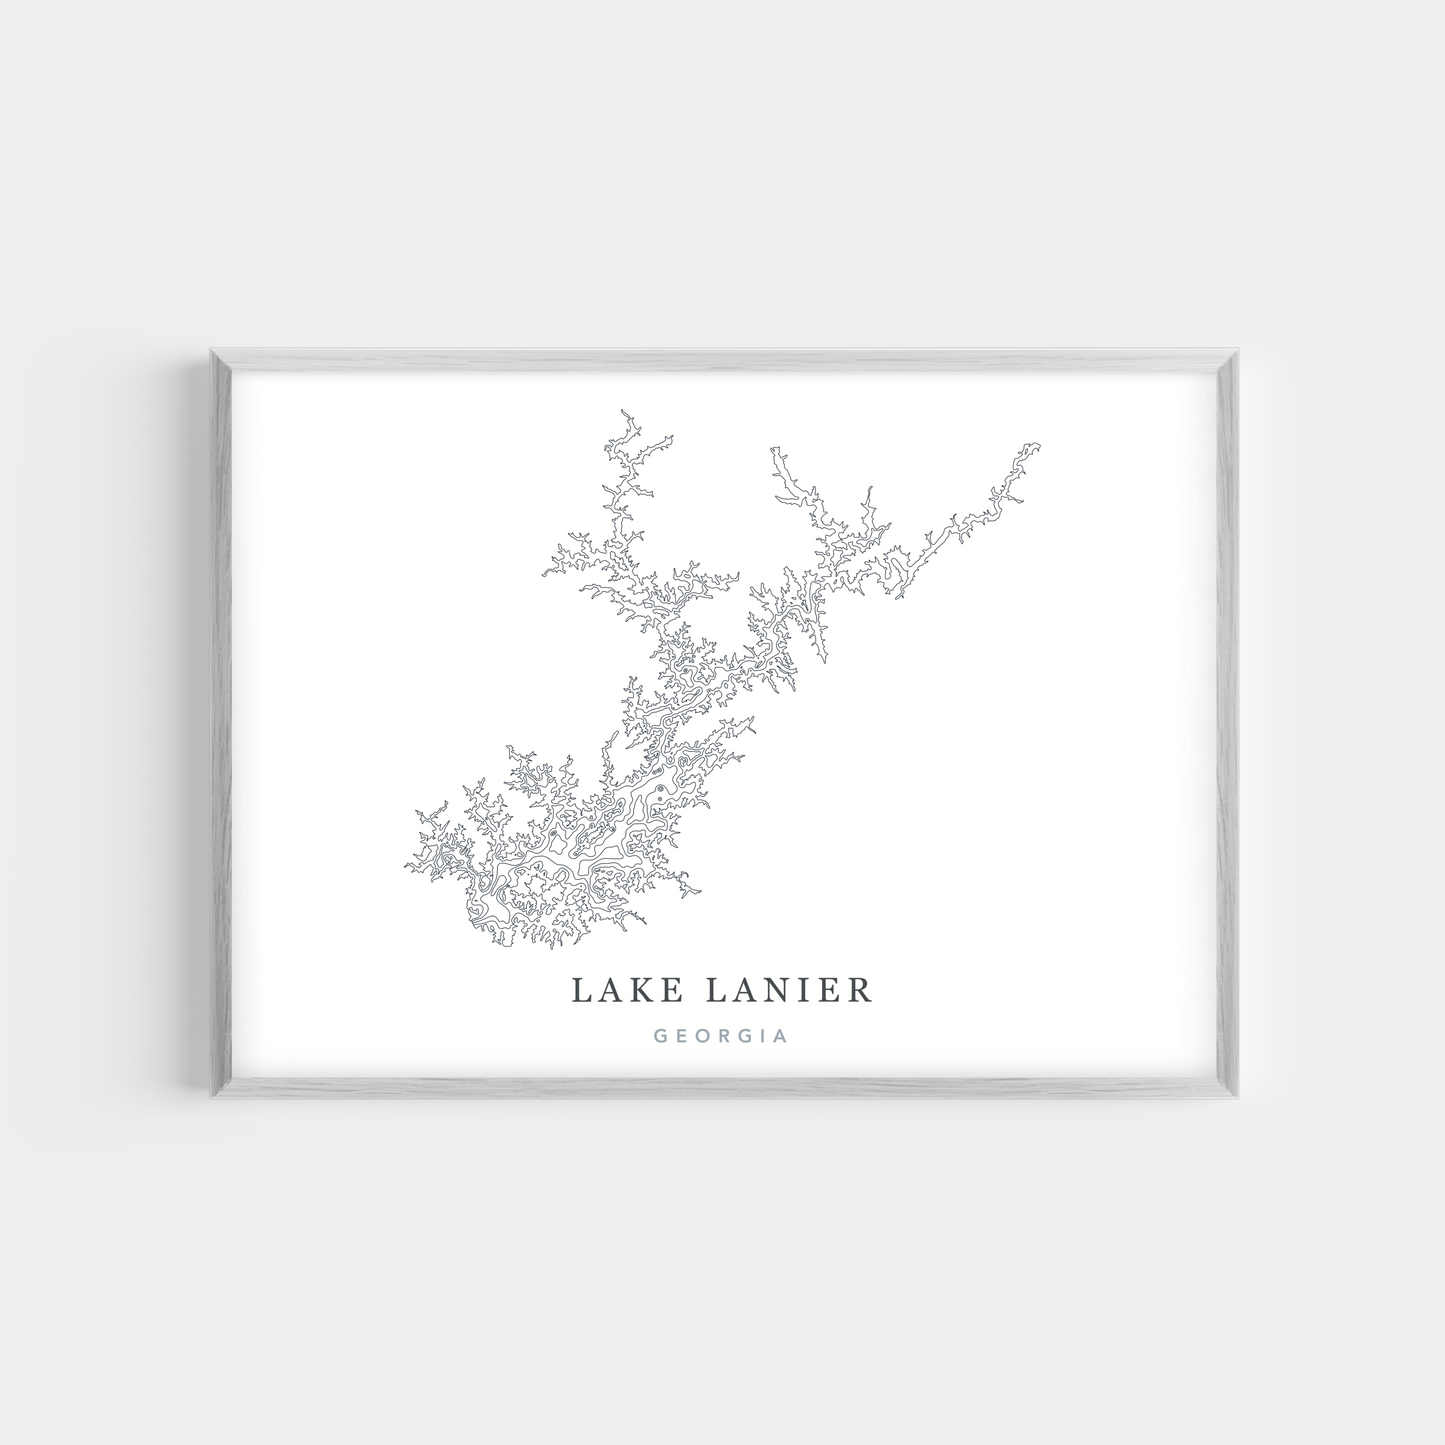 Lake Lanier, Georgia | Photo Print